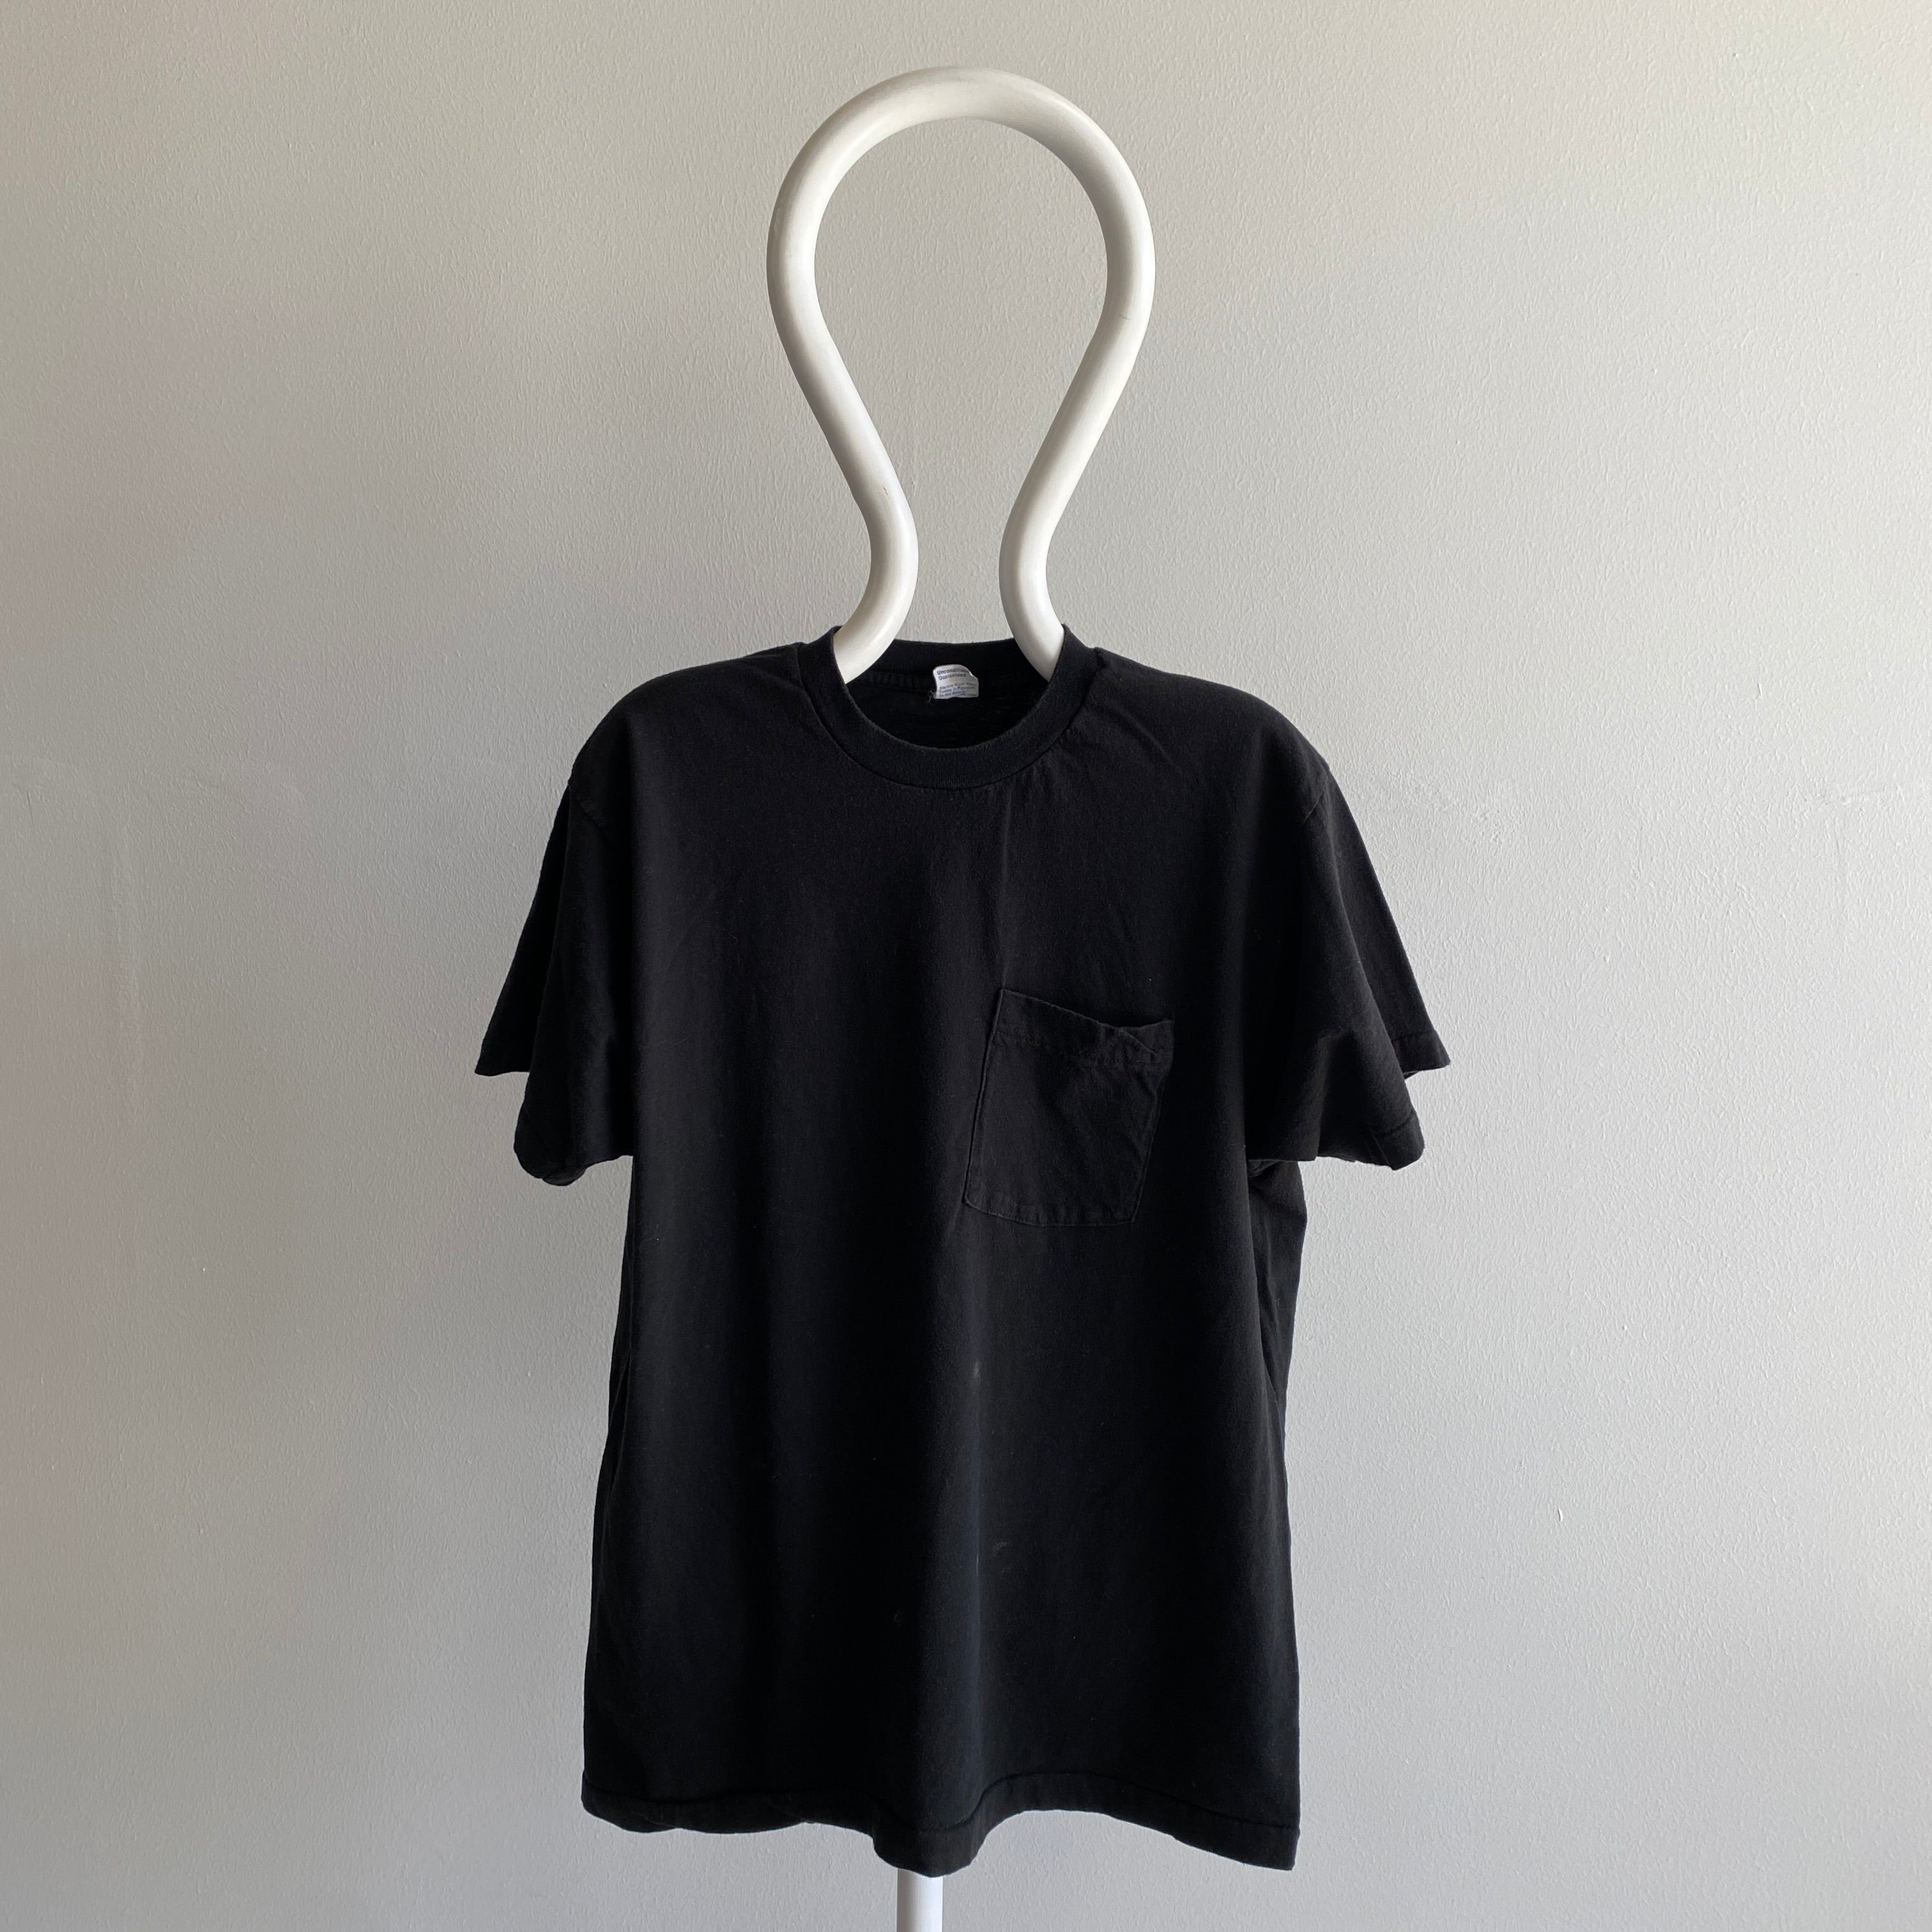 1980s BVD Blank Black Pocket T-Shirt